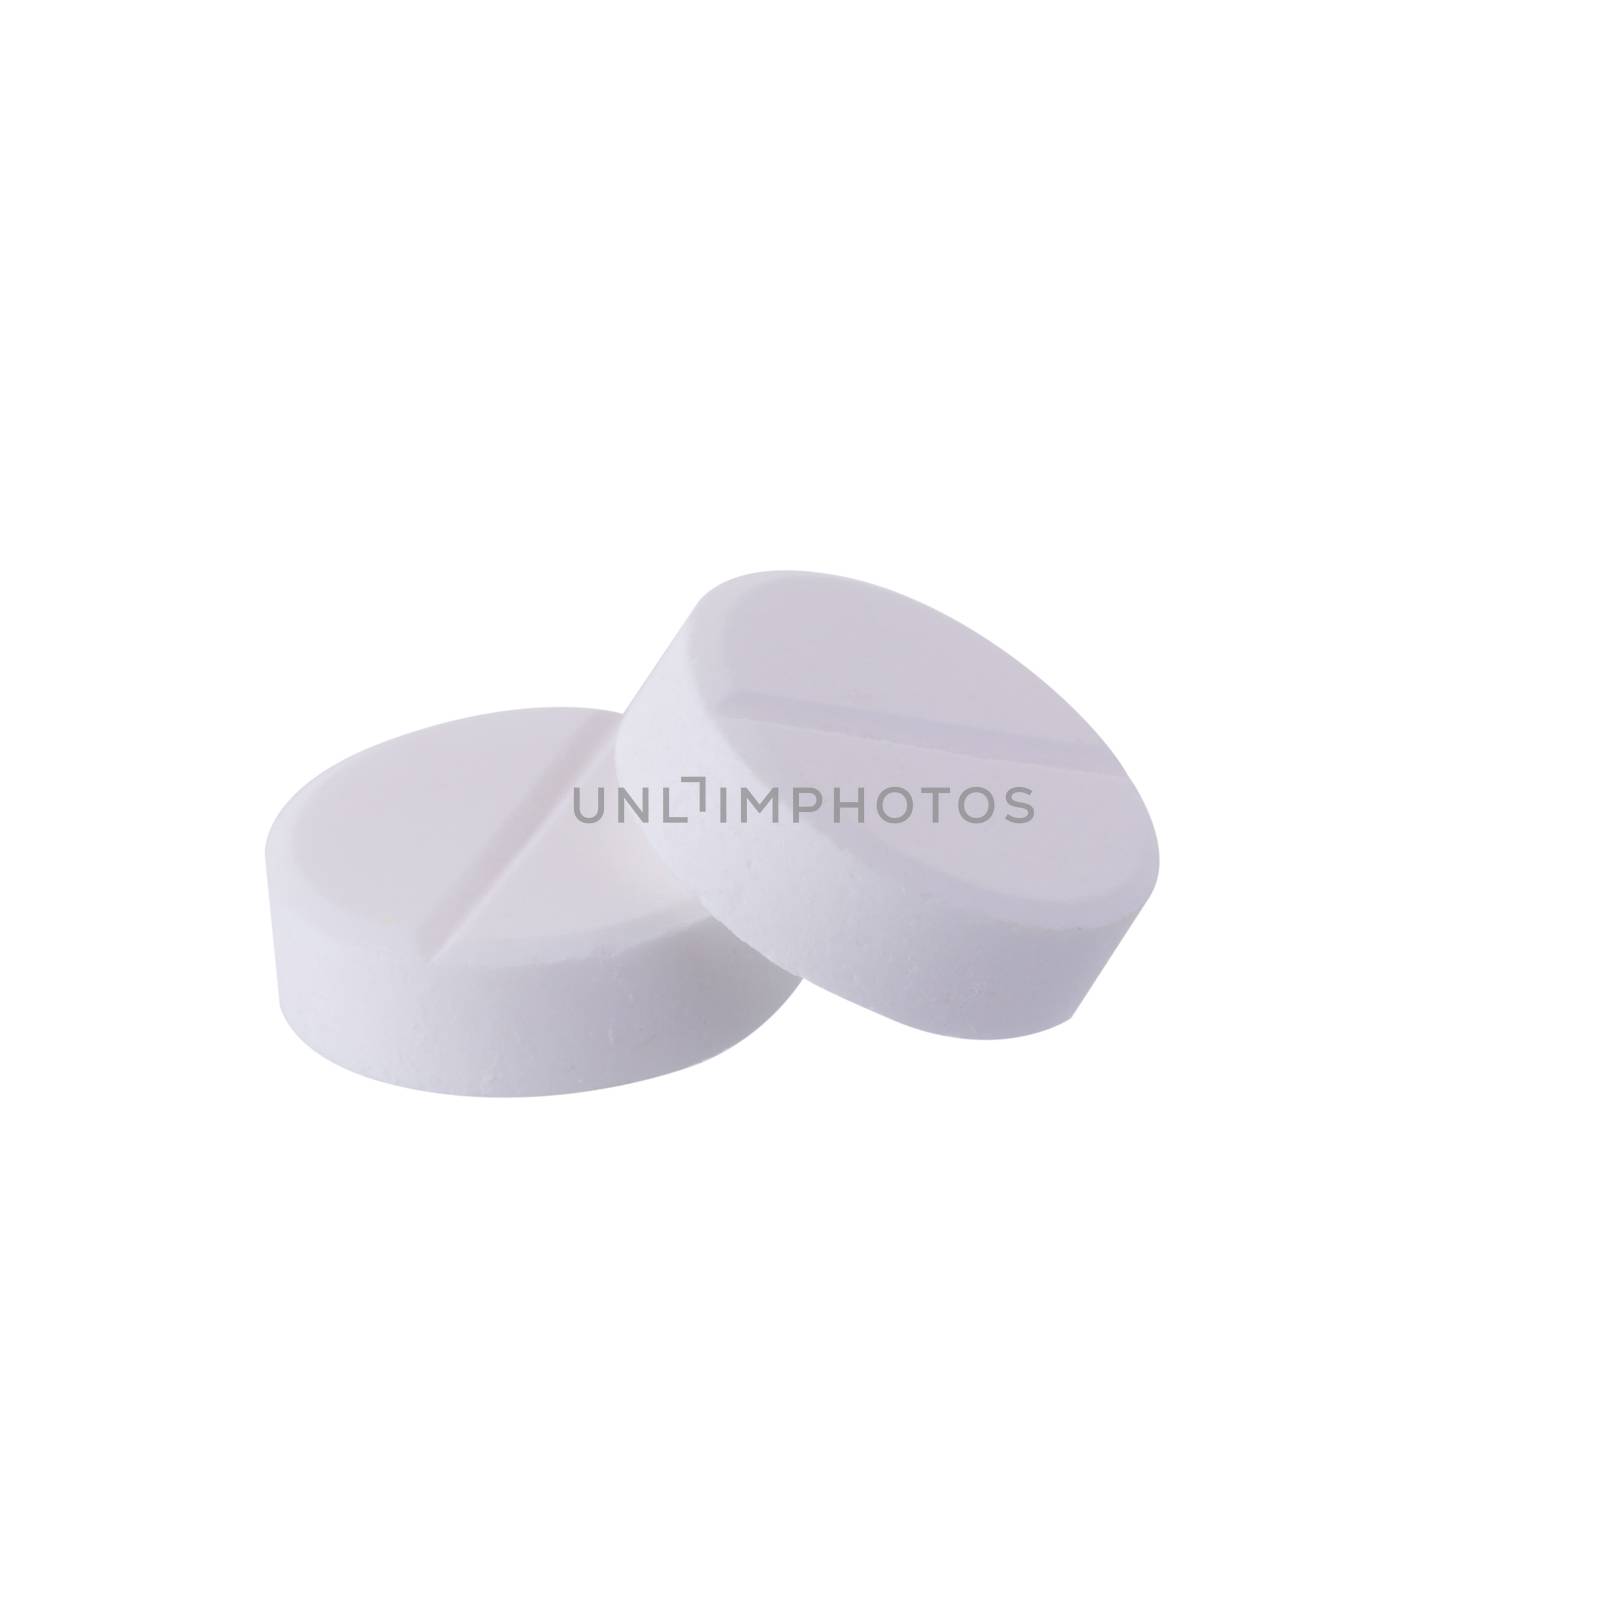 Paracetamol medicine tablets isolated on white background.